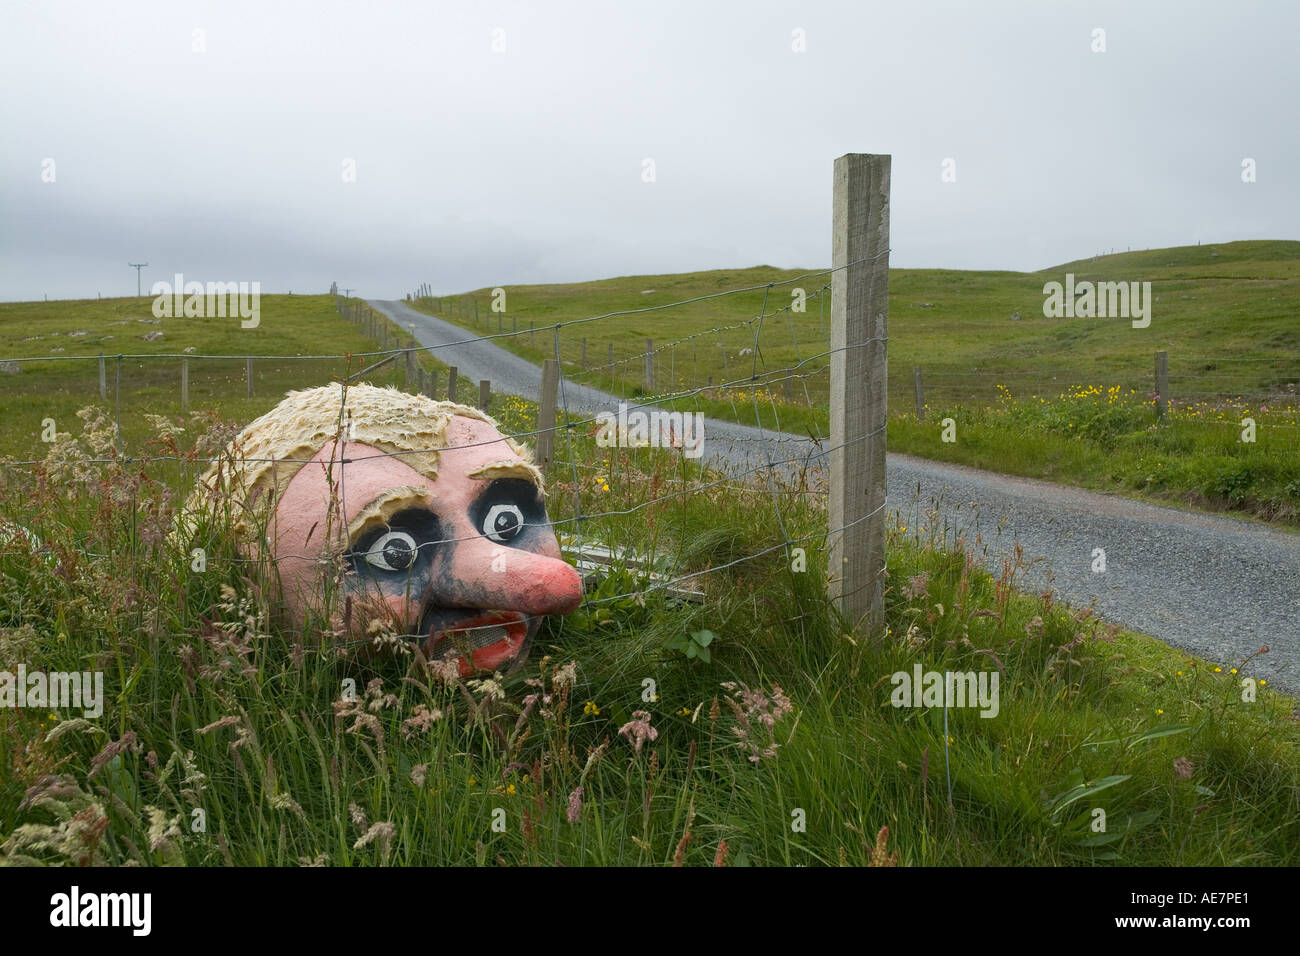 dh BRINDISTER SHETLAND Leiter Modell Troll Puppe hinter Zaun Im Feld Straße Marionette Landschaft Insel Stockfoto